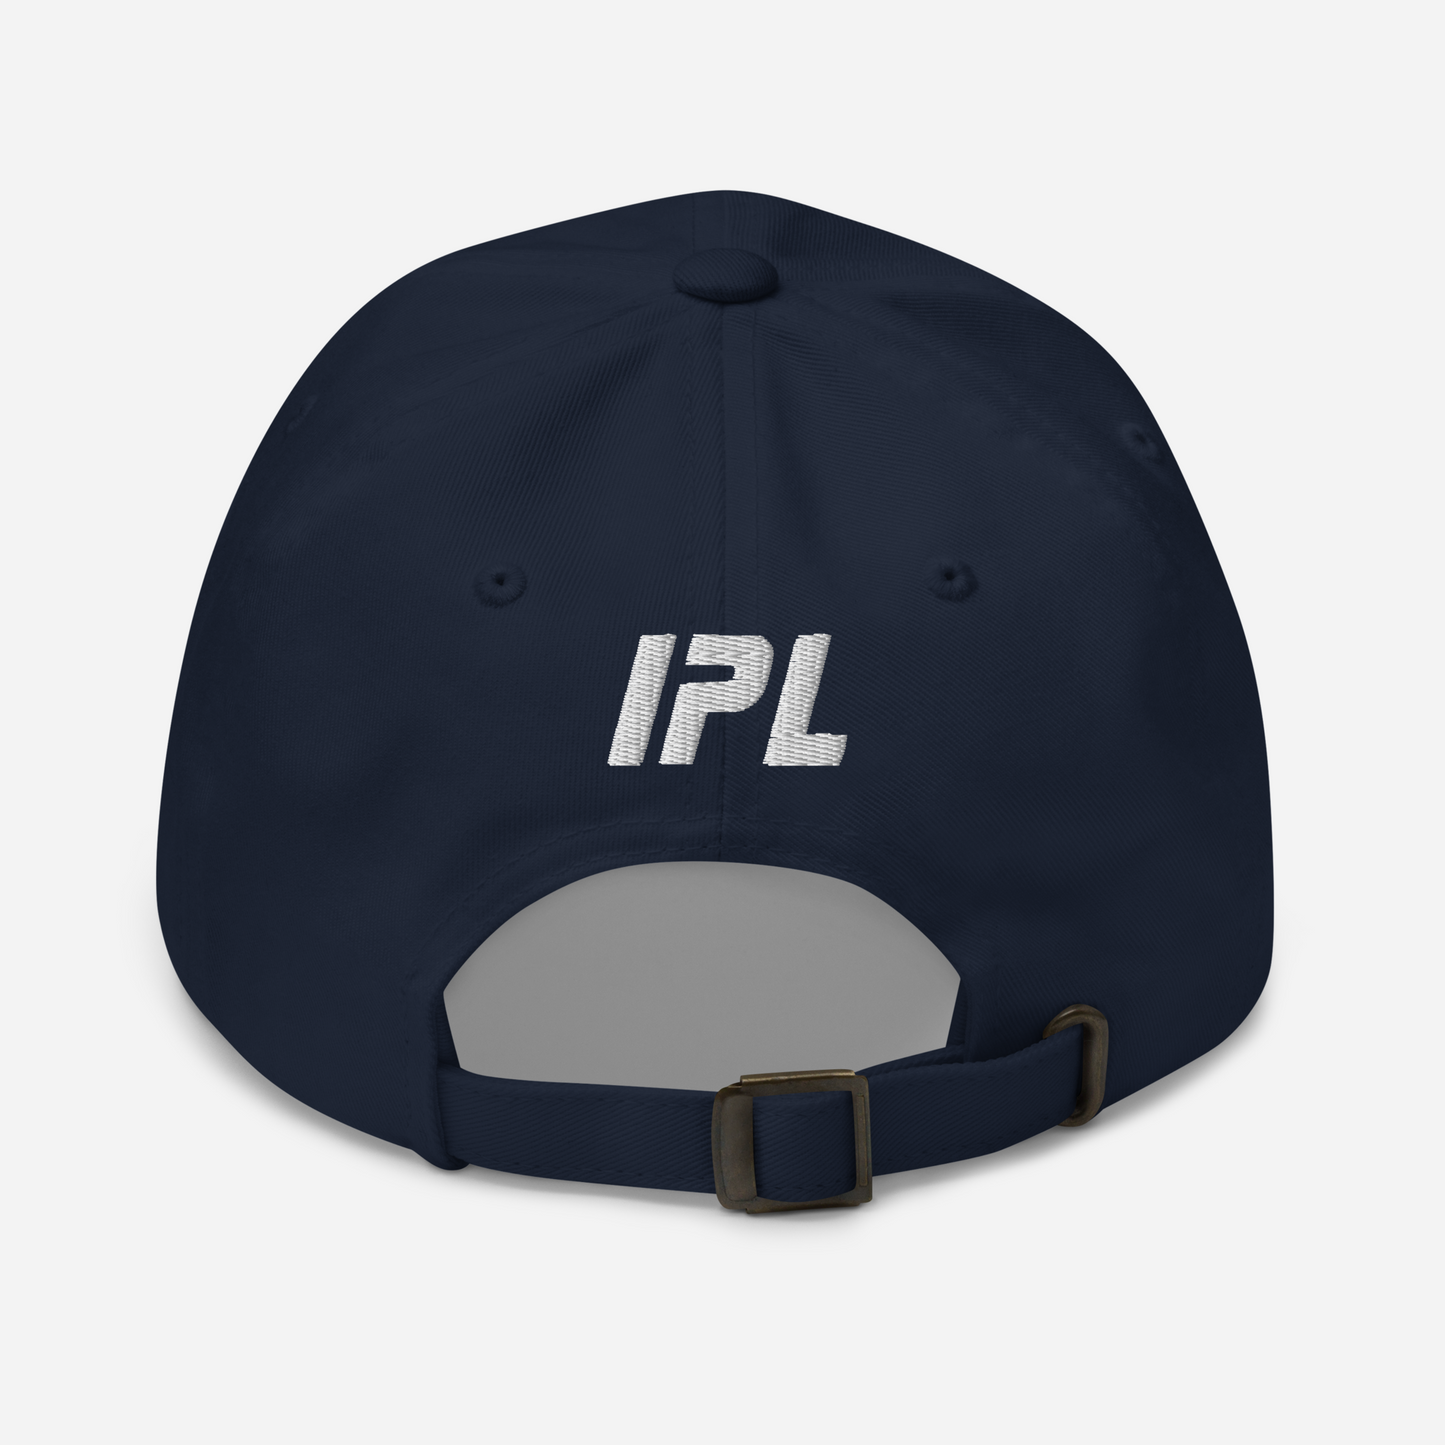 IPL Pro Athlete Series Embroidered Hat